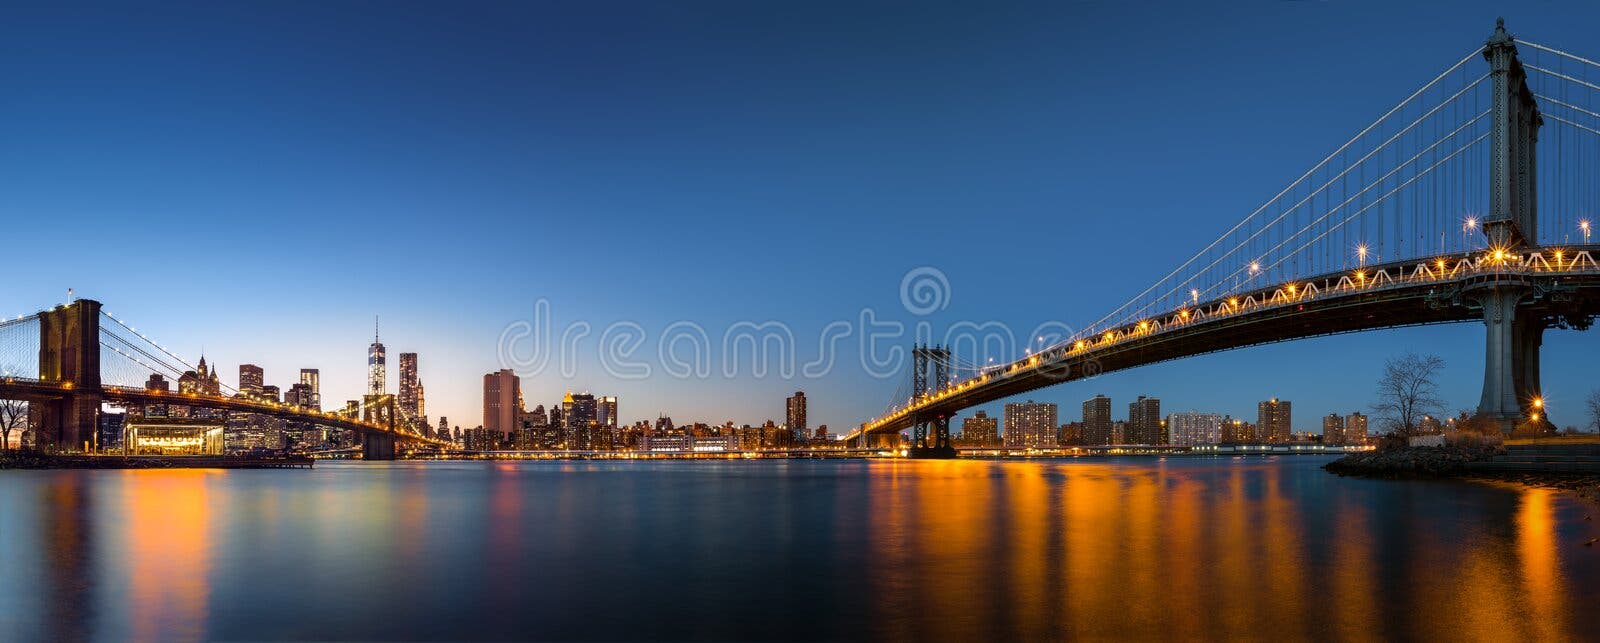 New Orleans Skyline and Mississippi River Bridge Stock Image - Image of ...